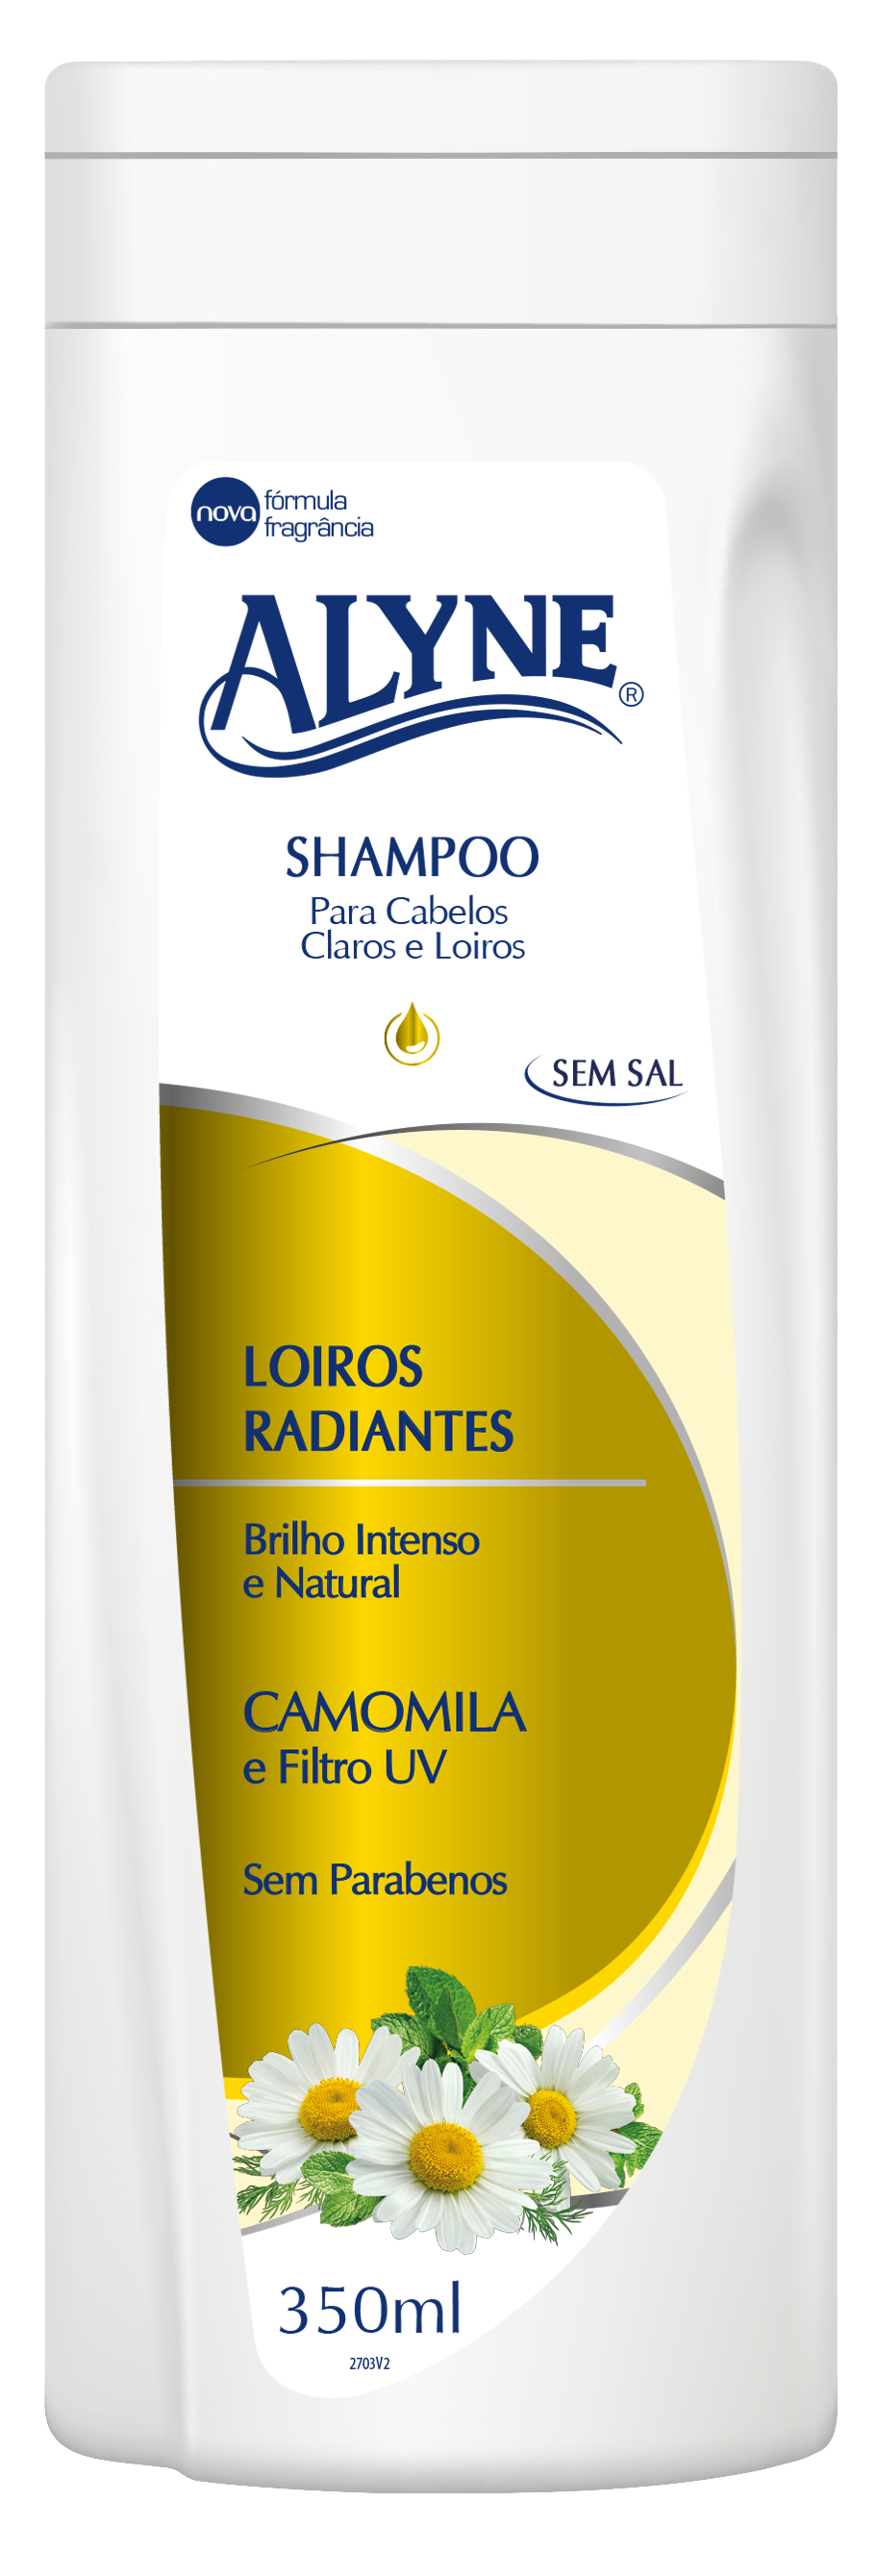 Shampoo Alyne Loiros Radiantes 350ml